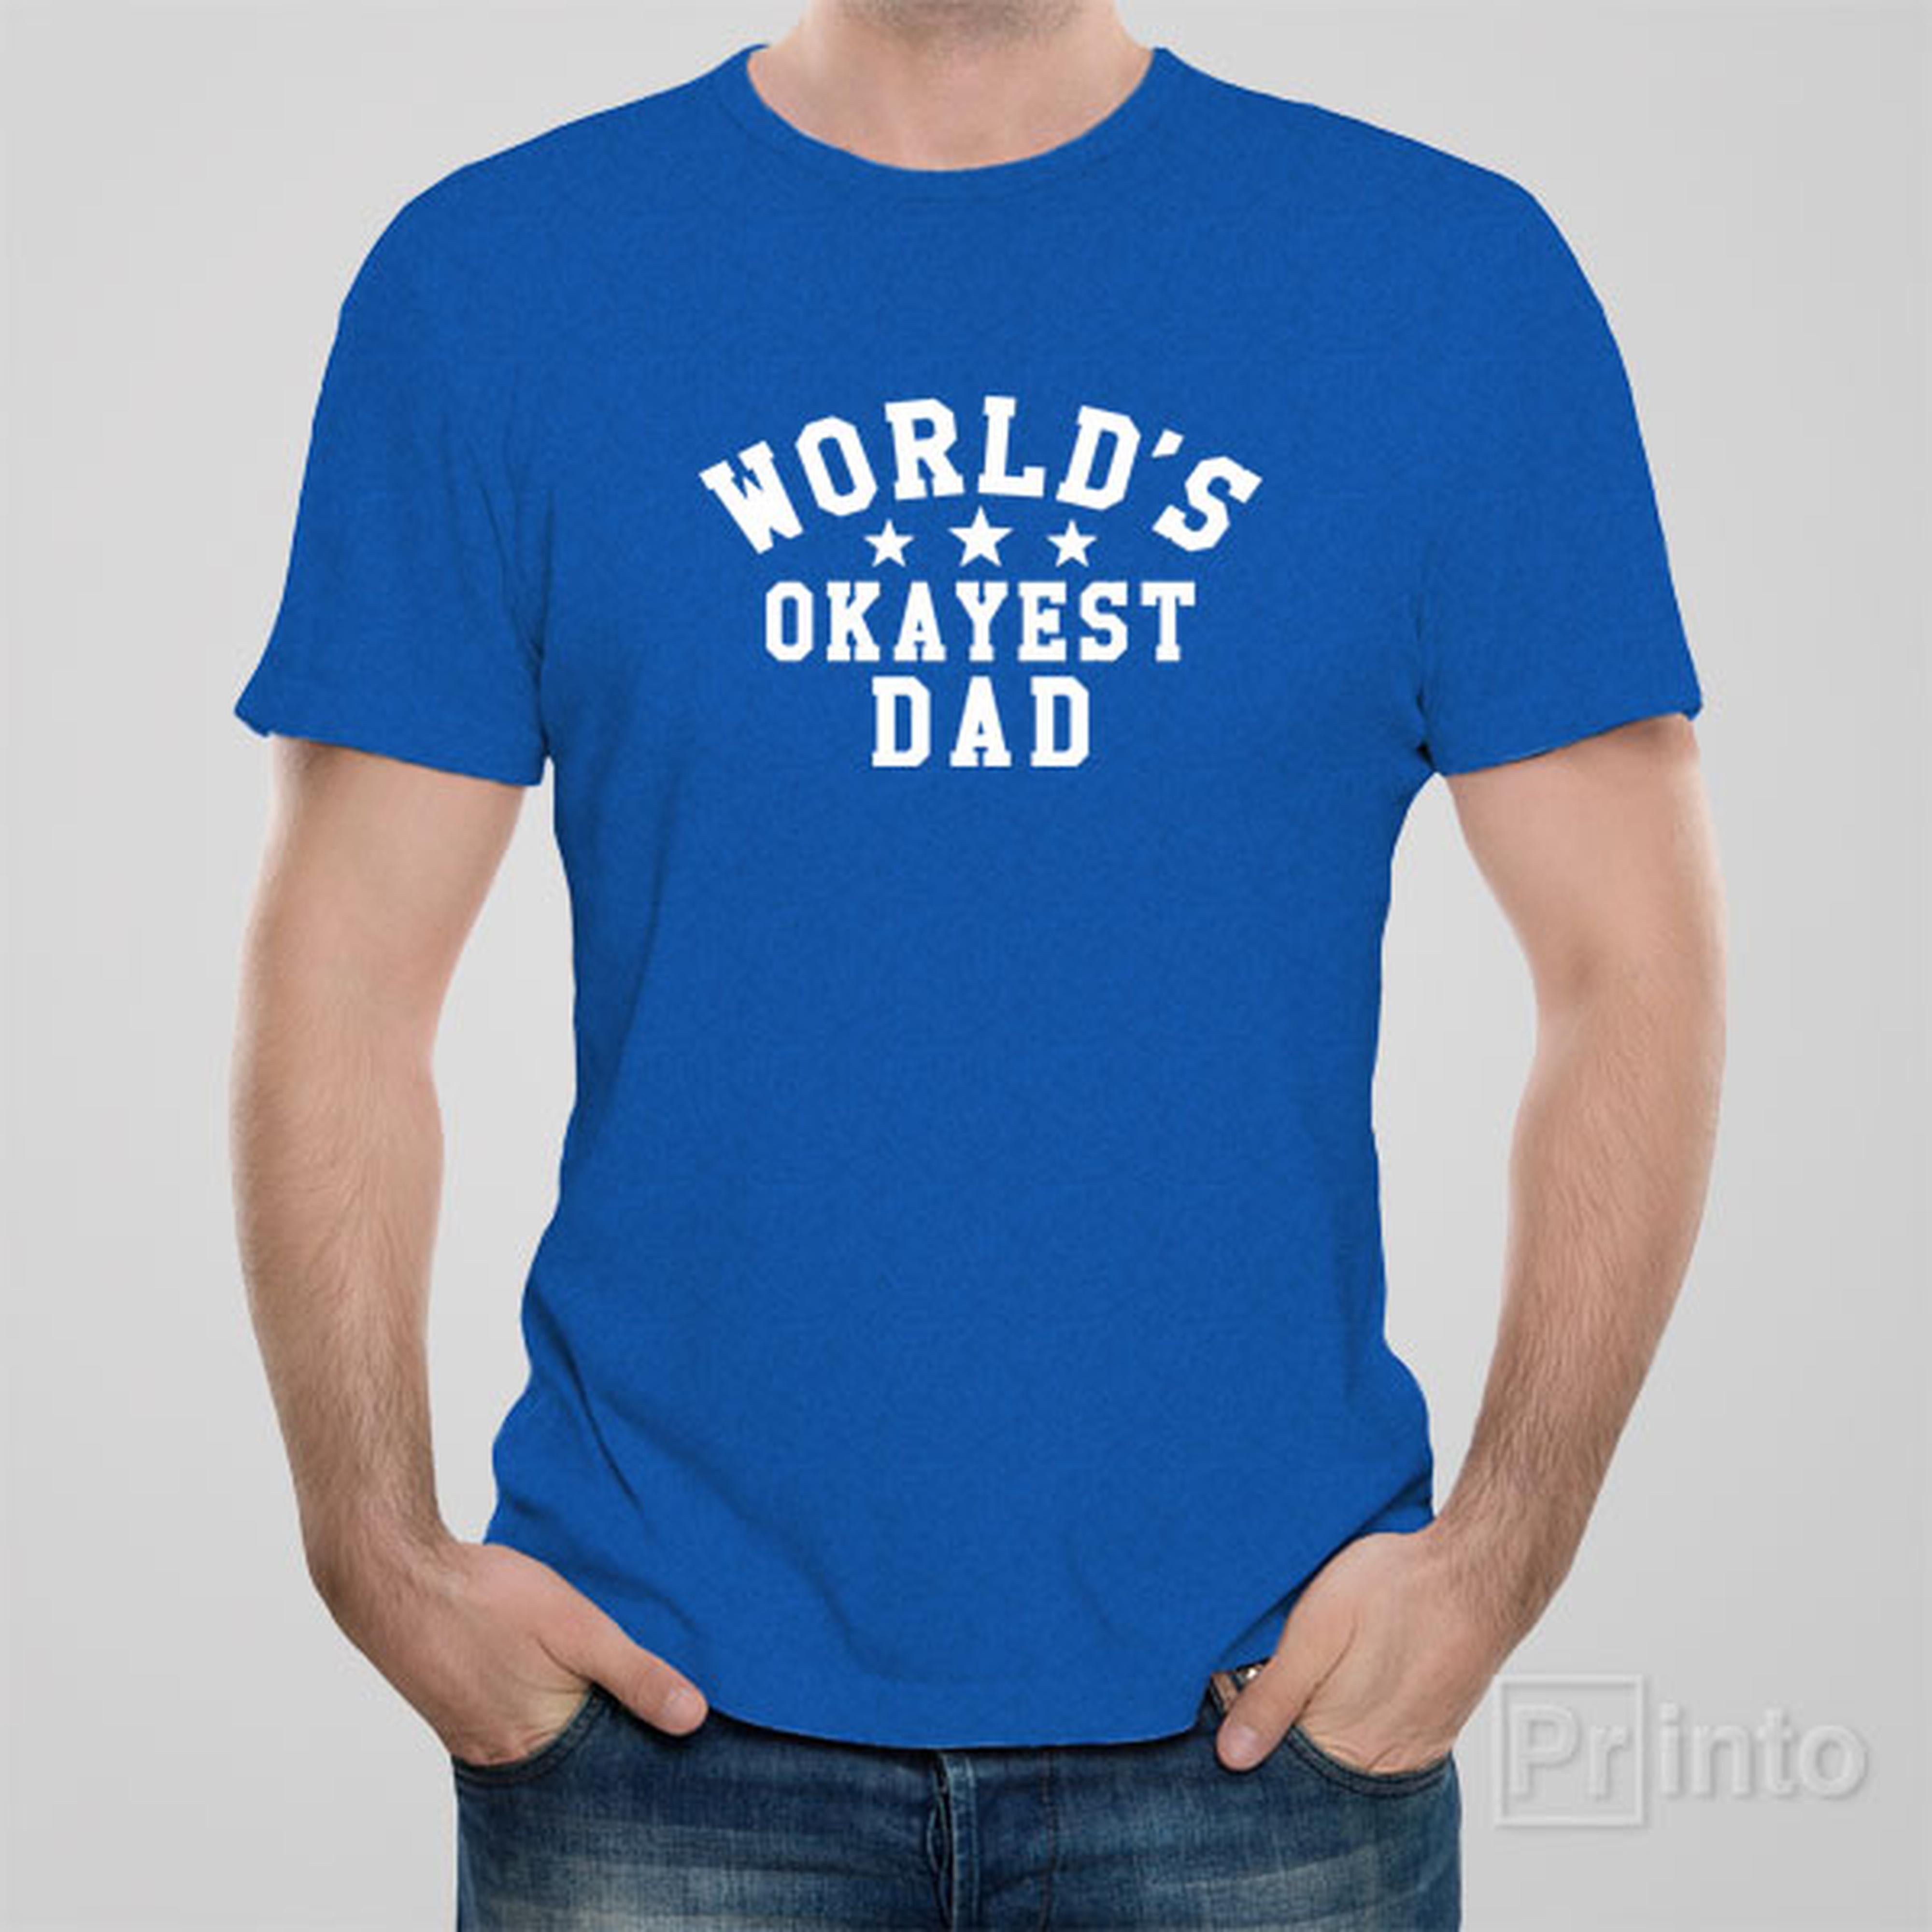 worlds-okayest-dad-t-shirt